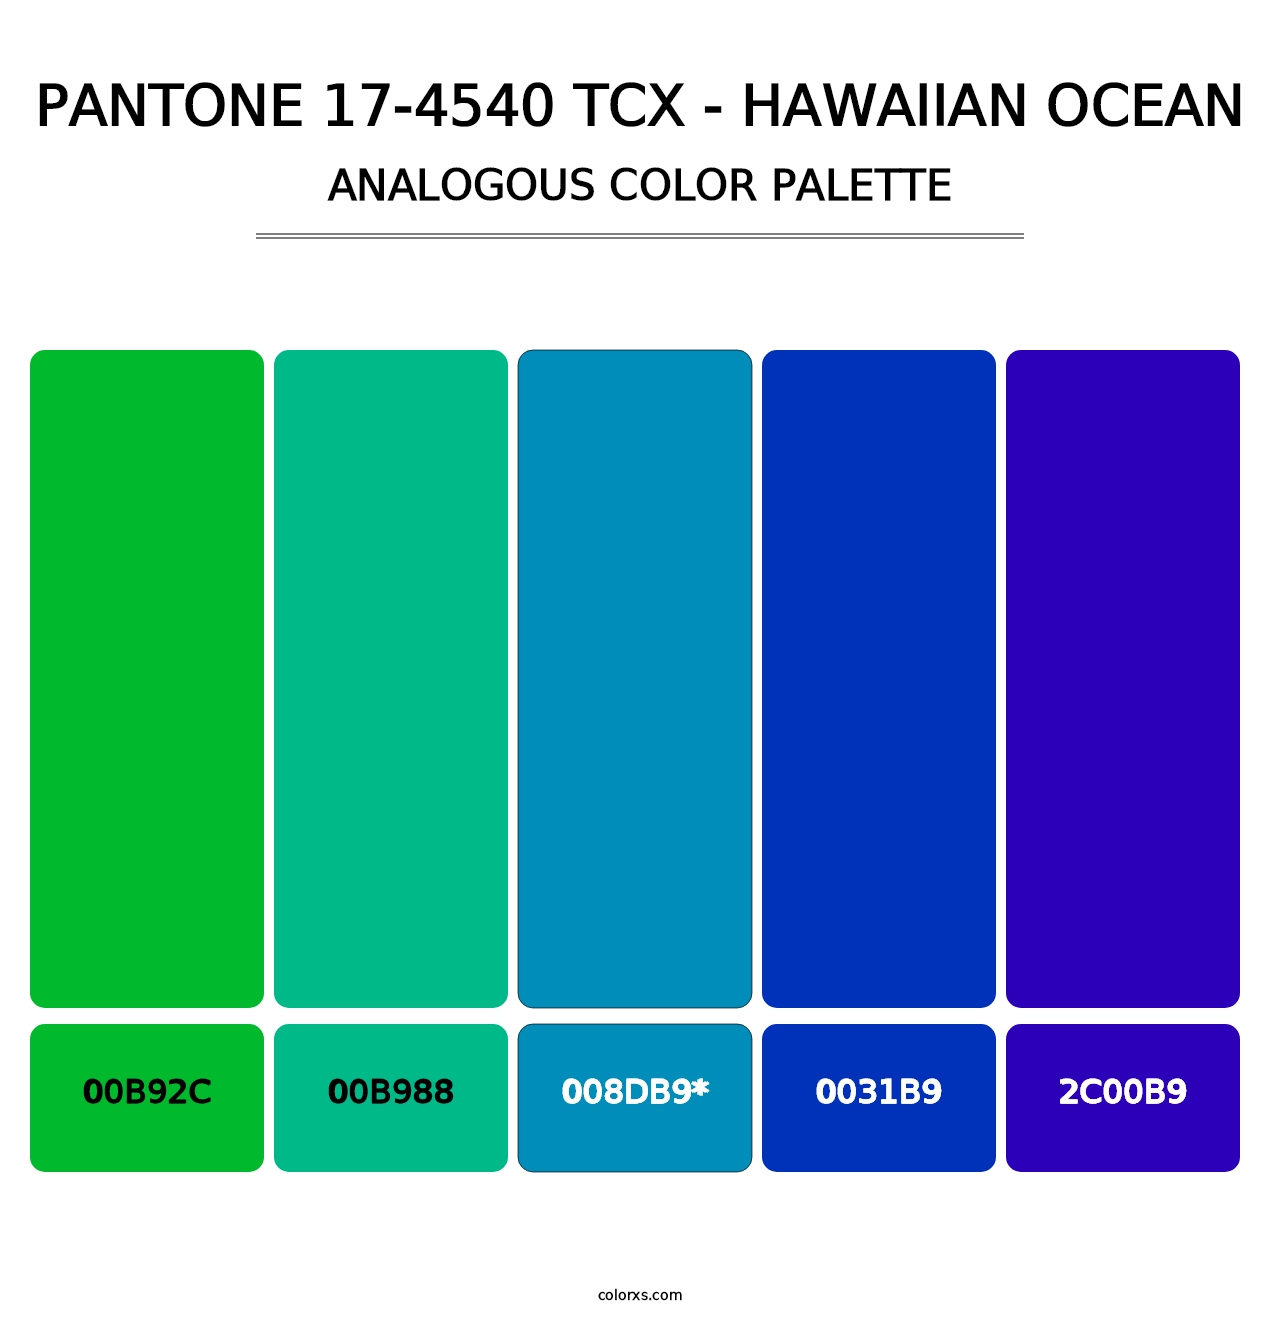 PANTONE 17-4540 TCX - Hawaiian Ocean - Analogous Color Palette